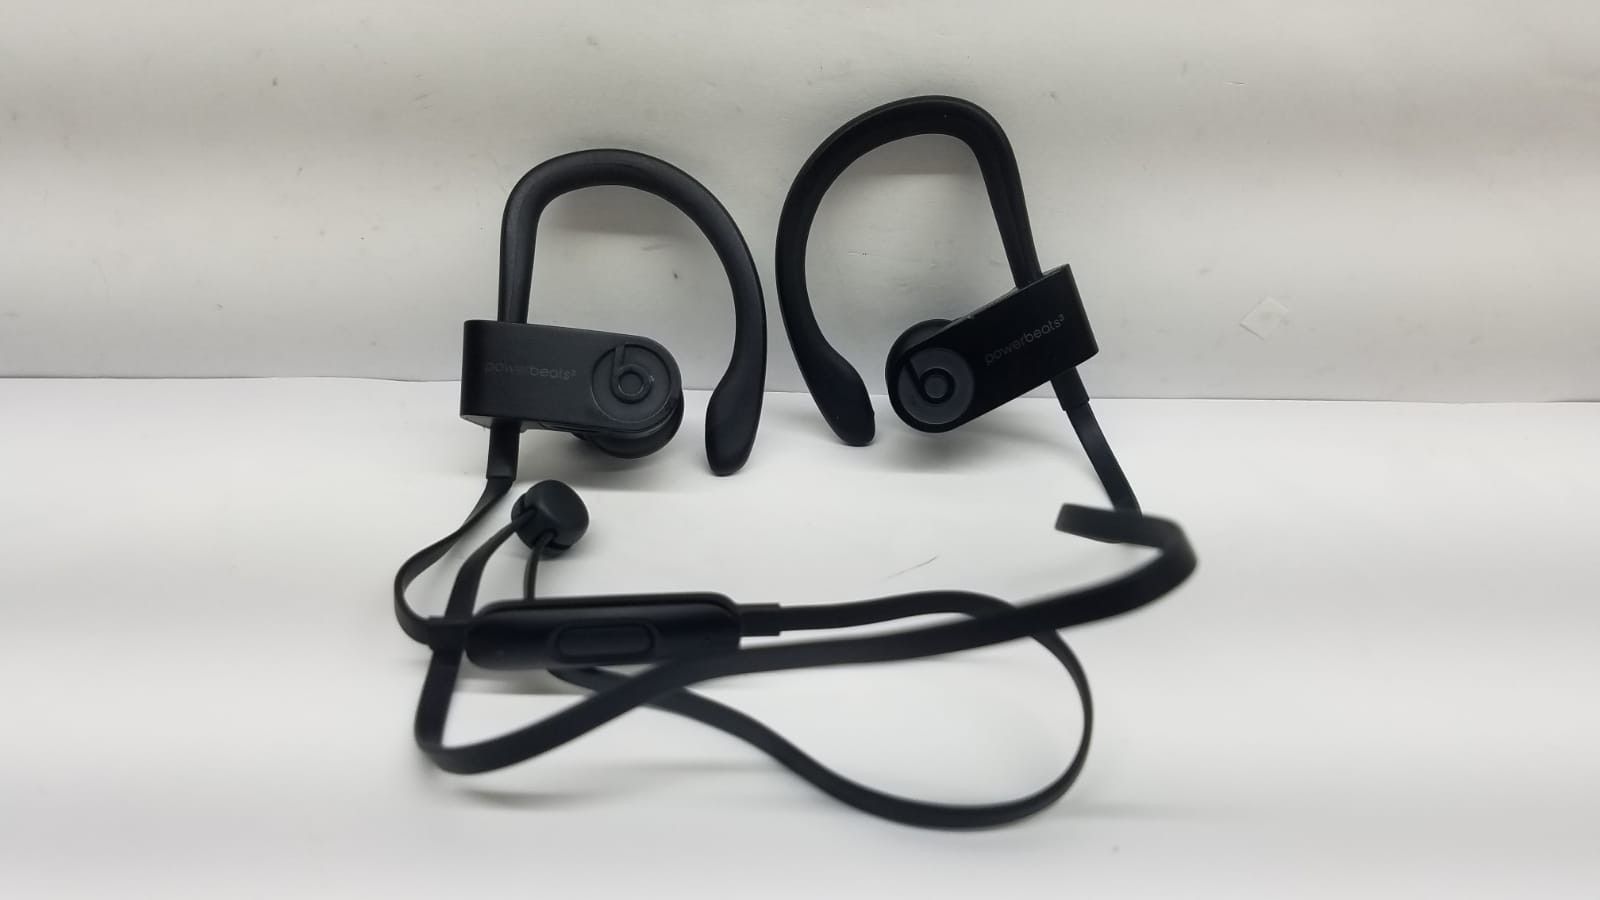 Power Beats 3 Bluetooth headphones, wireless headset, Audifonos inalambricos.